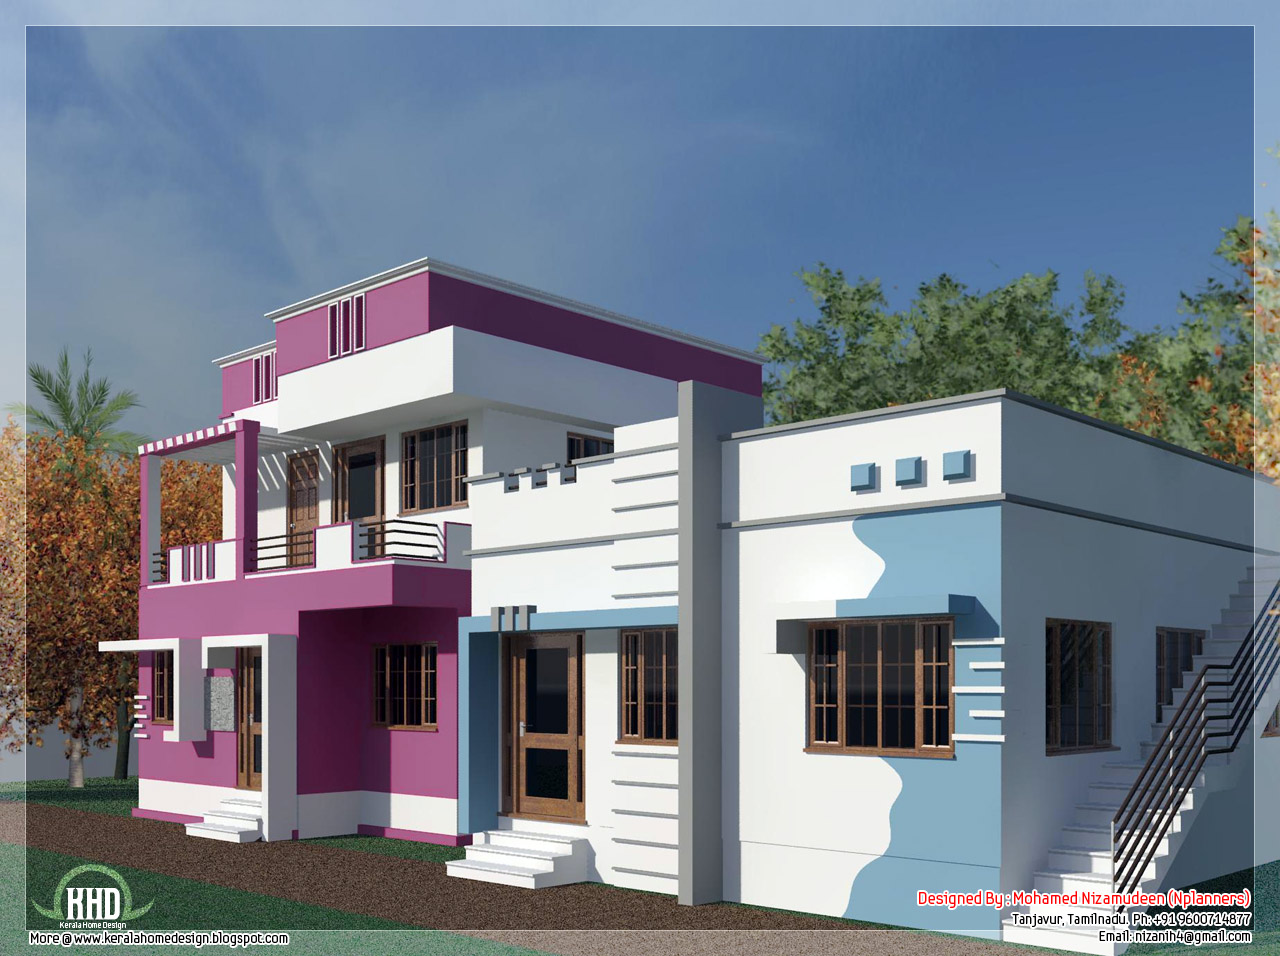  Tamilnadu  model home  design in 3000 sq feet Indian House  